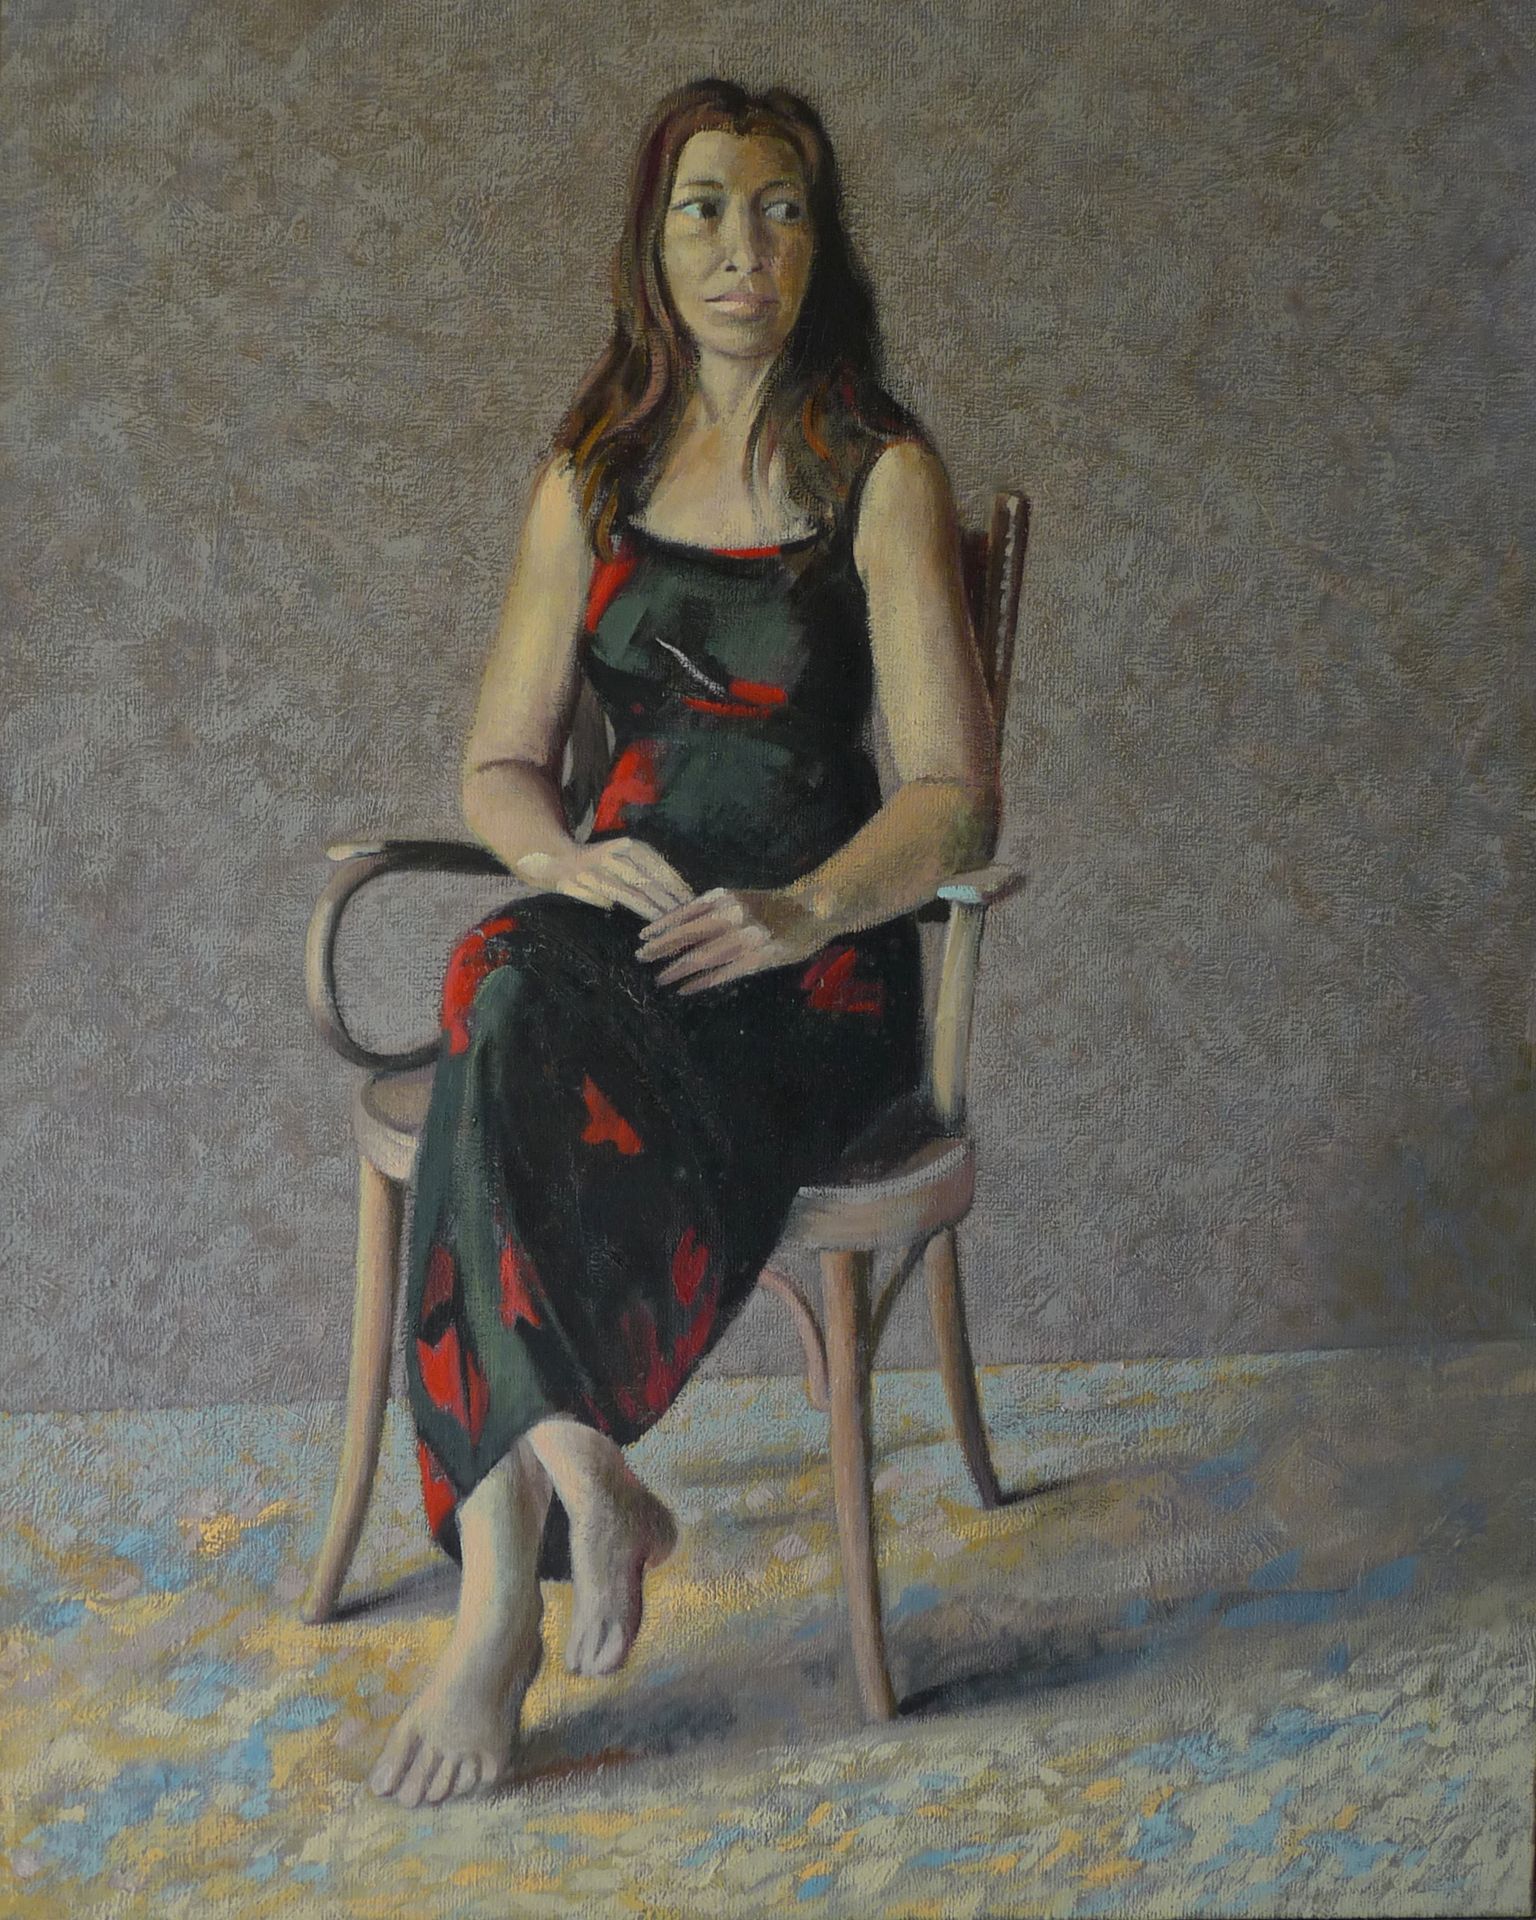 Null 让-克劳德-贝松-吉拉尔 (1938-2021)

无题30 (Malaucène)

布面油画，无签名

81 x 65 cm